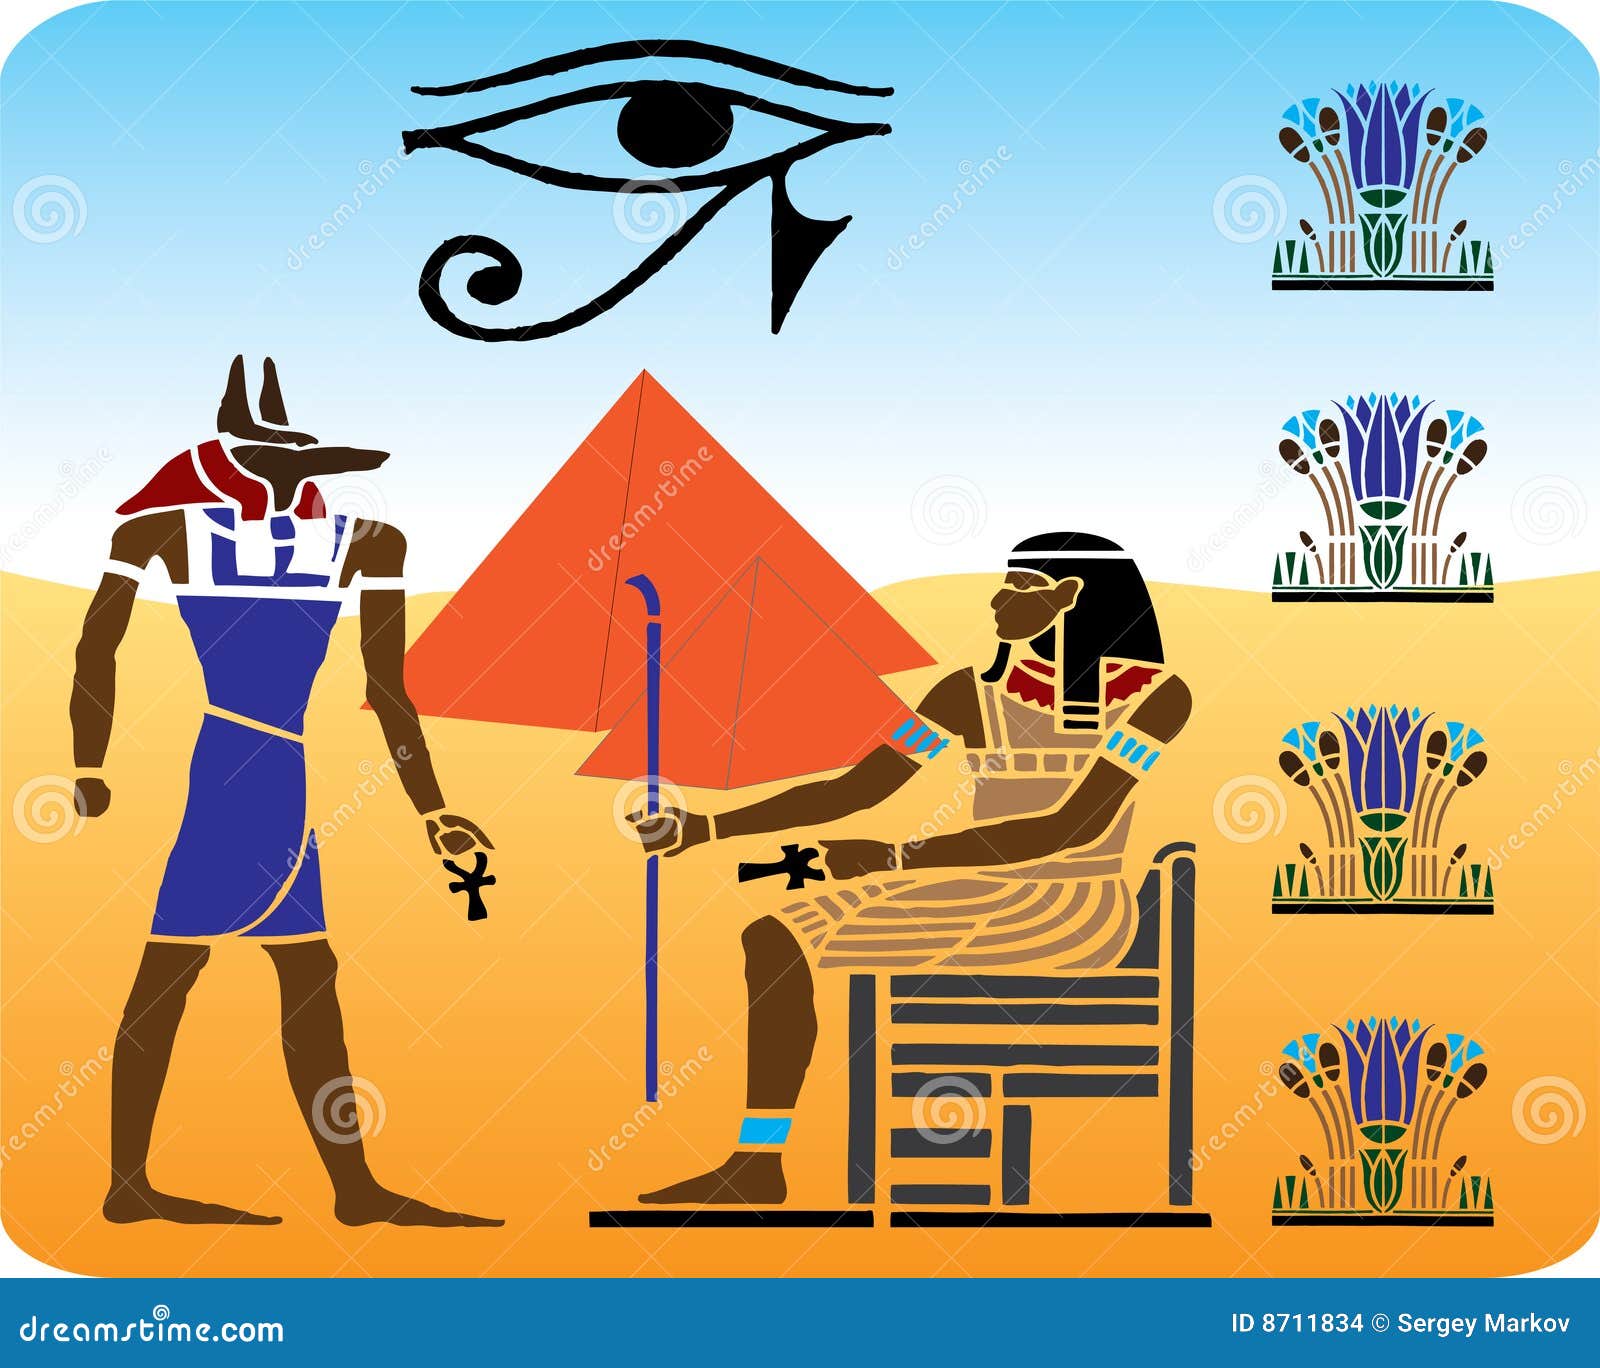 egyptian hieroglyphics - 10